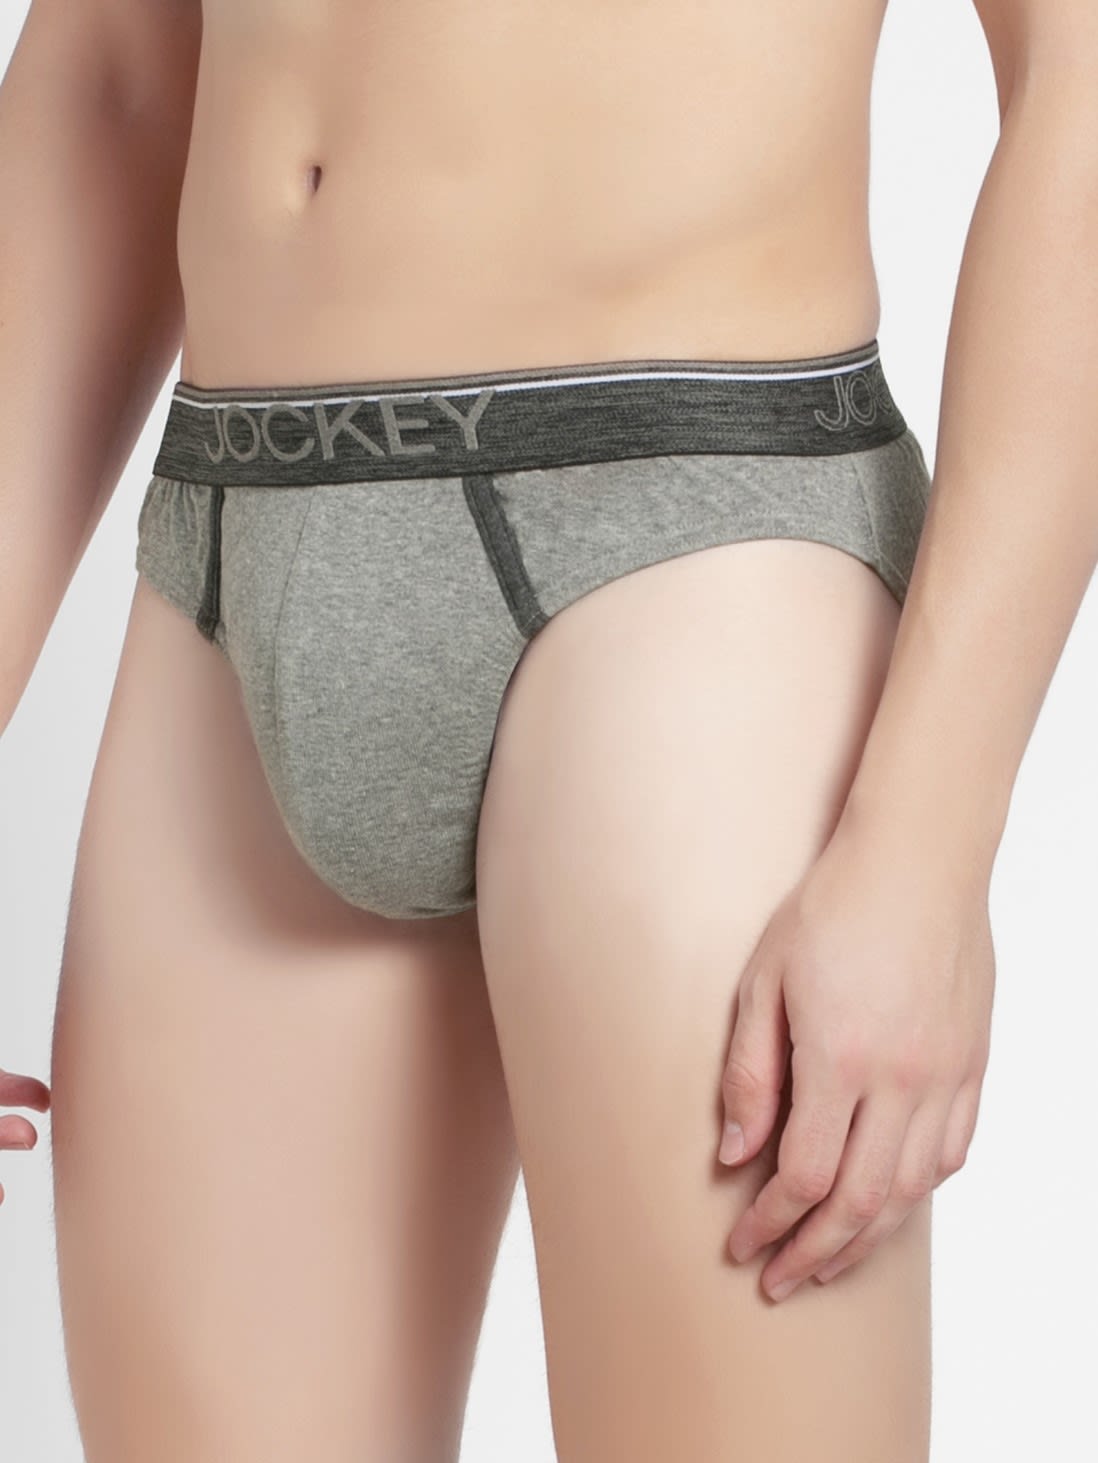 Jockey 3X Mens Underwear Modern Classic 8044 Latest Pattern Comy Fit Blk-Grey-Navy 